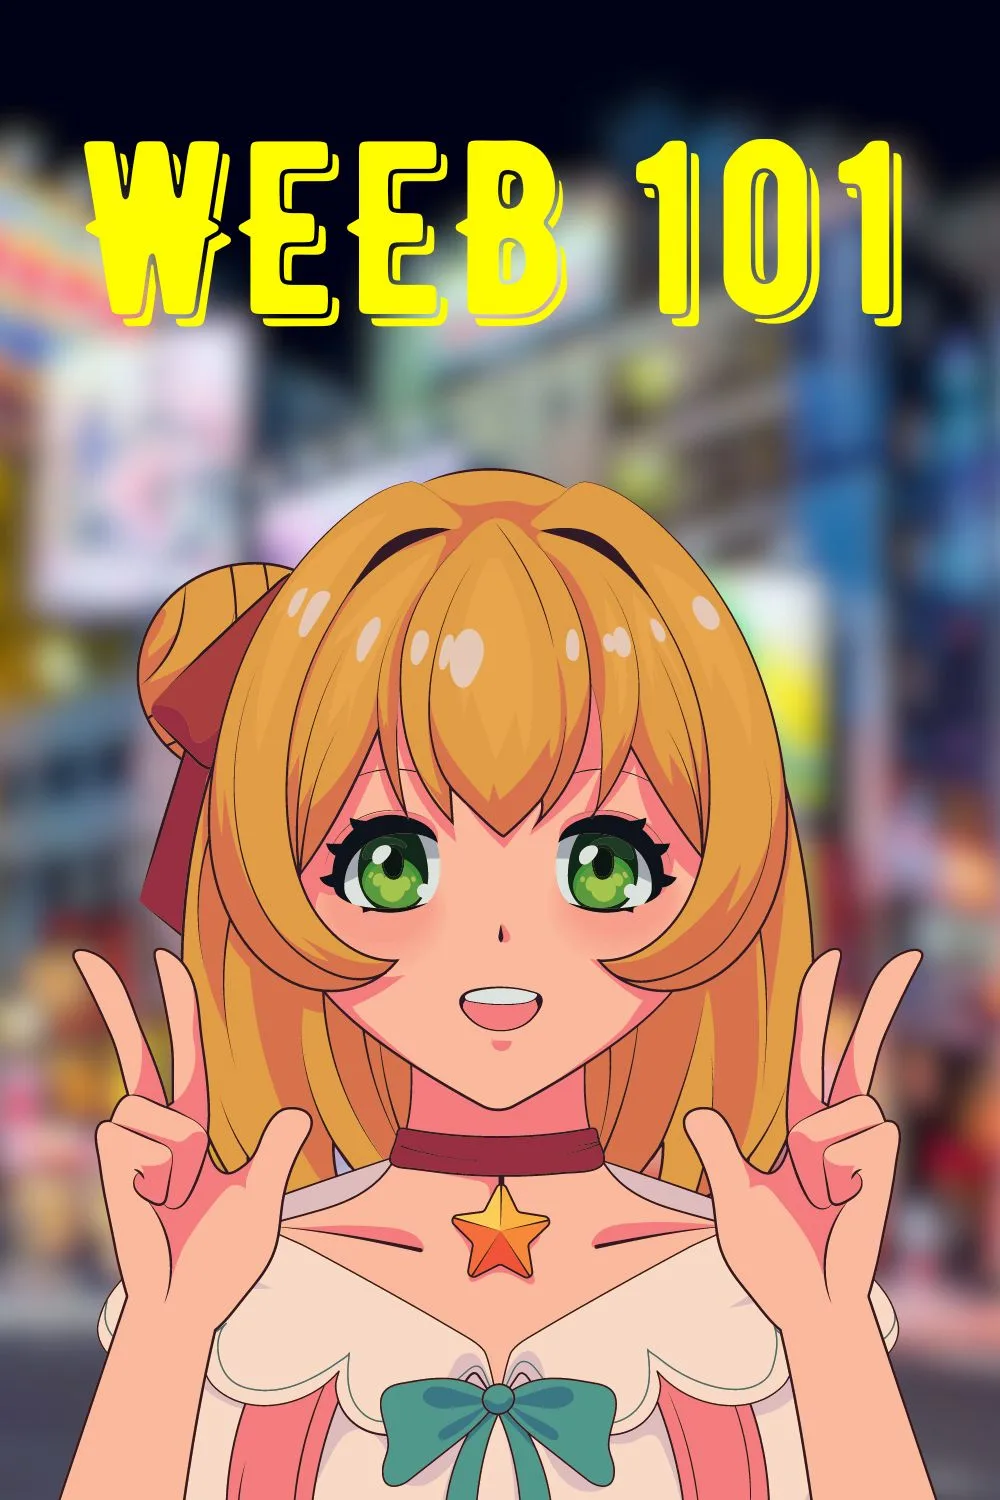 Stream Nekomya | Listen to weeb stuff anime version playlist online for  free on SoundCloud